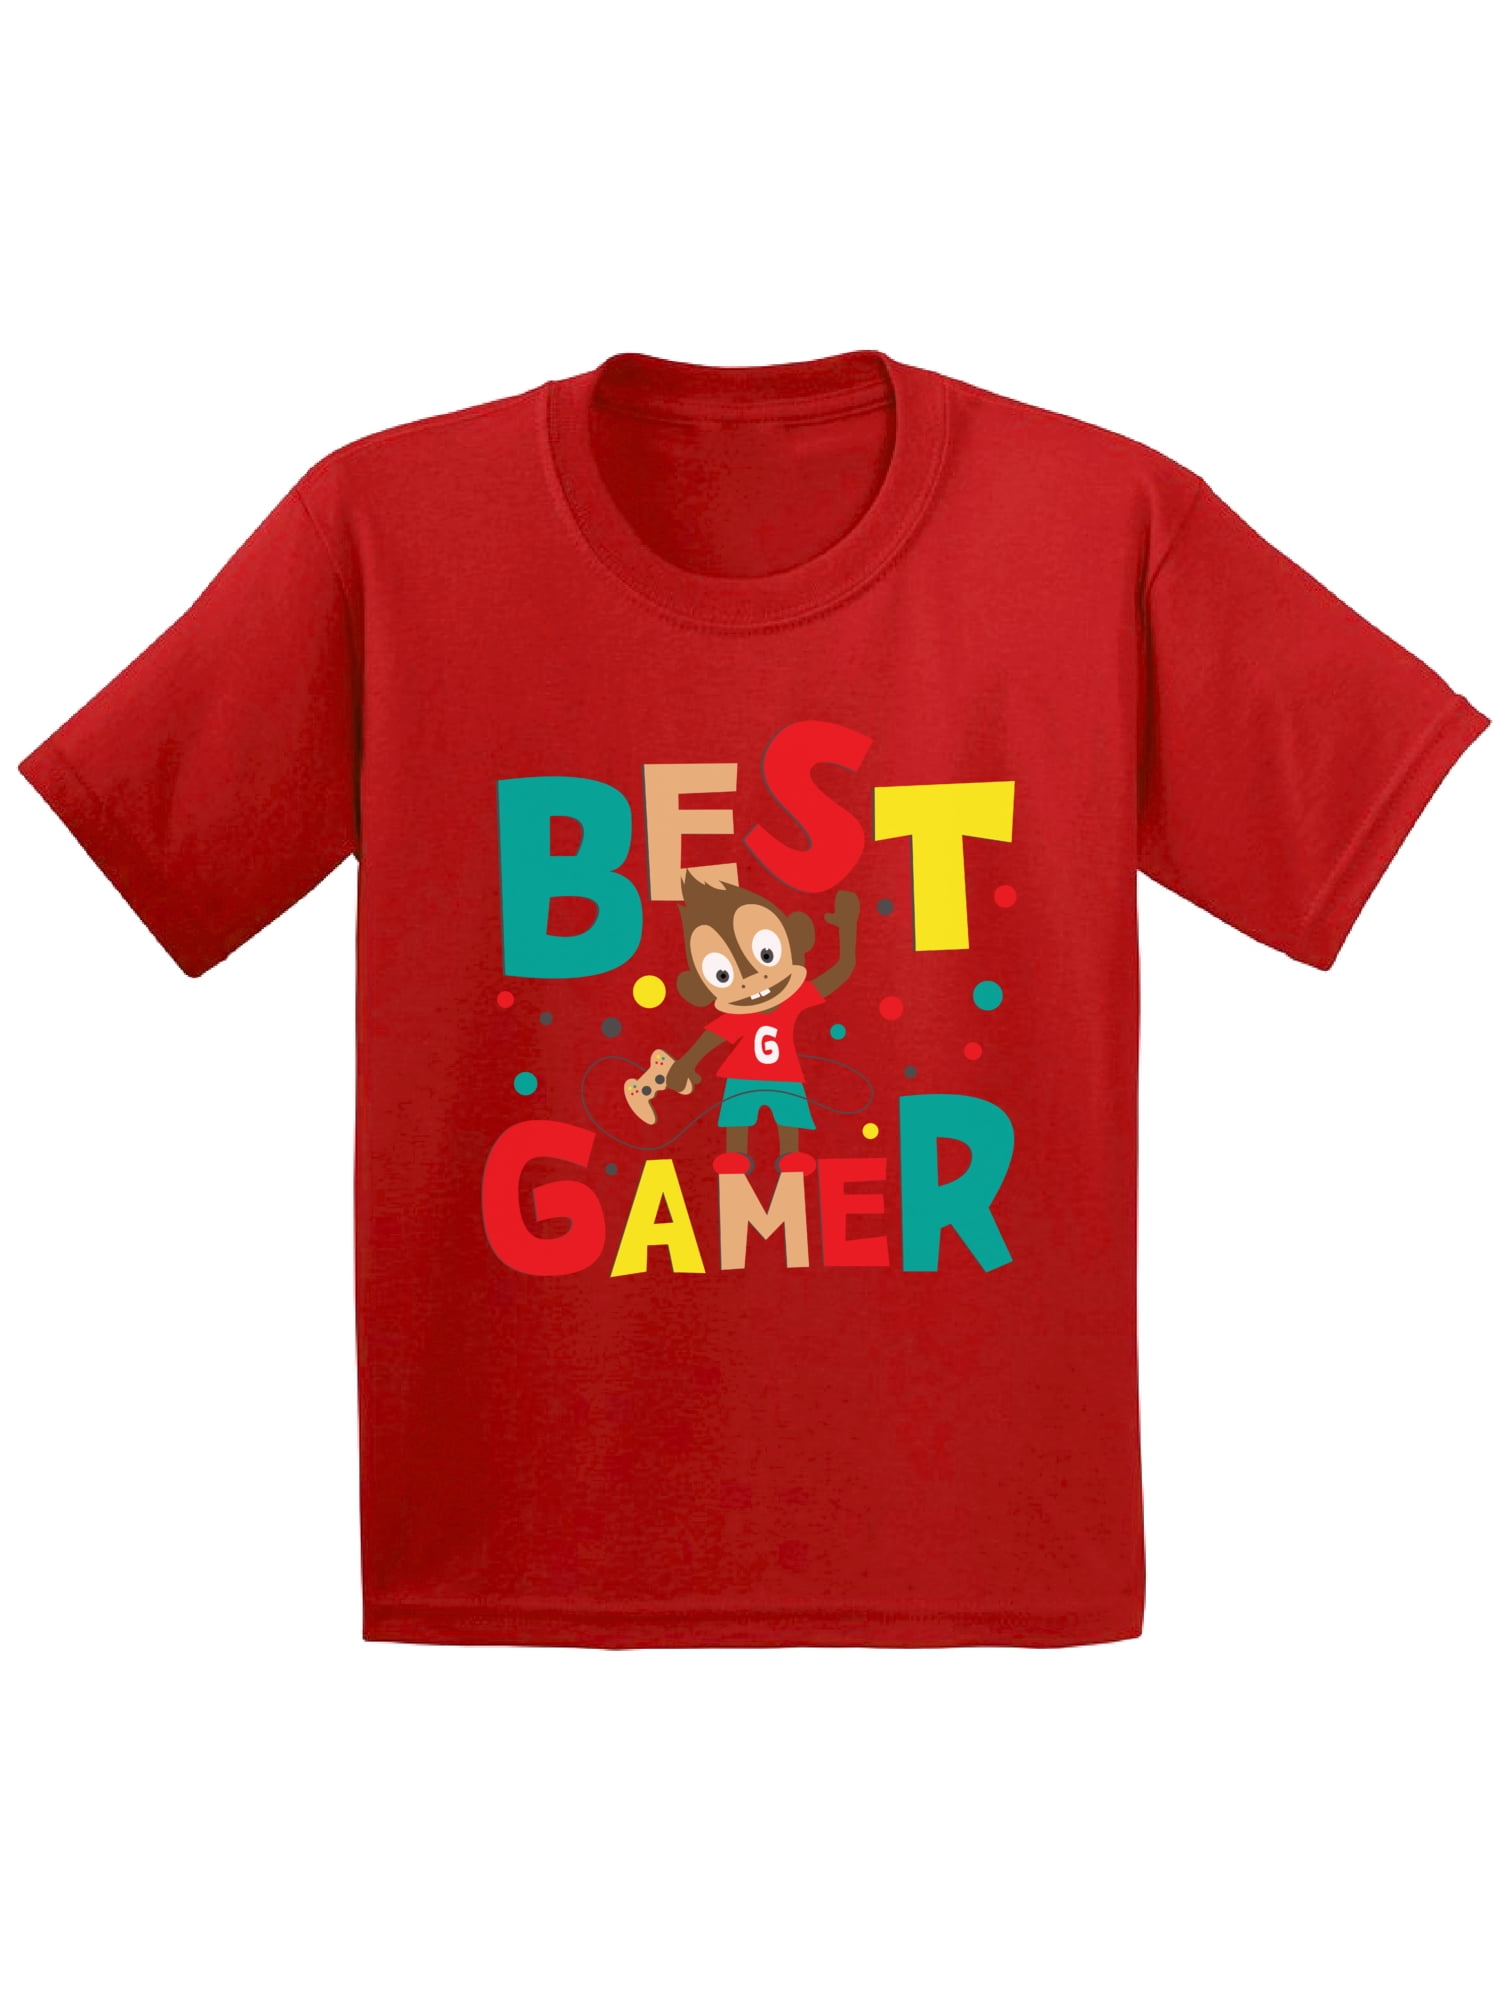 Roblox Kids T Shirt Funny Gaming Birthday Christmas Gift Game Tee Top